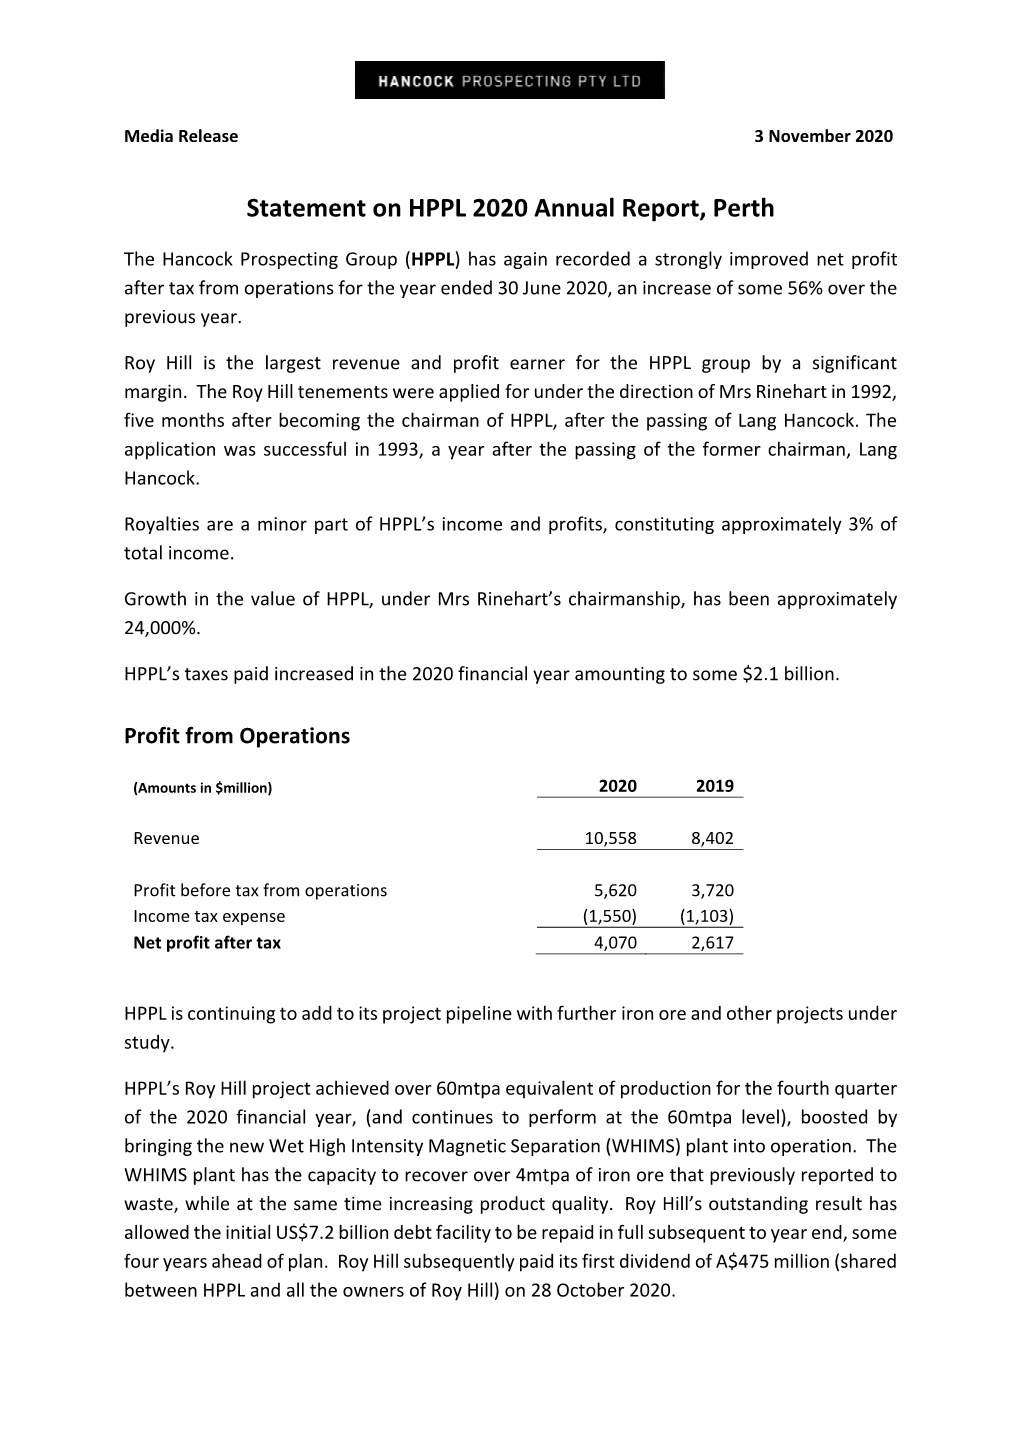 Statement on HPPL 2020 Annual Report, Perth